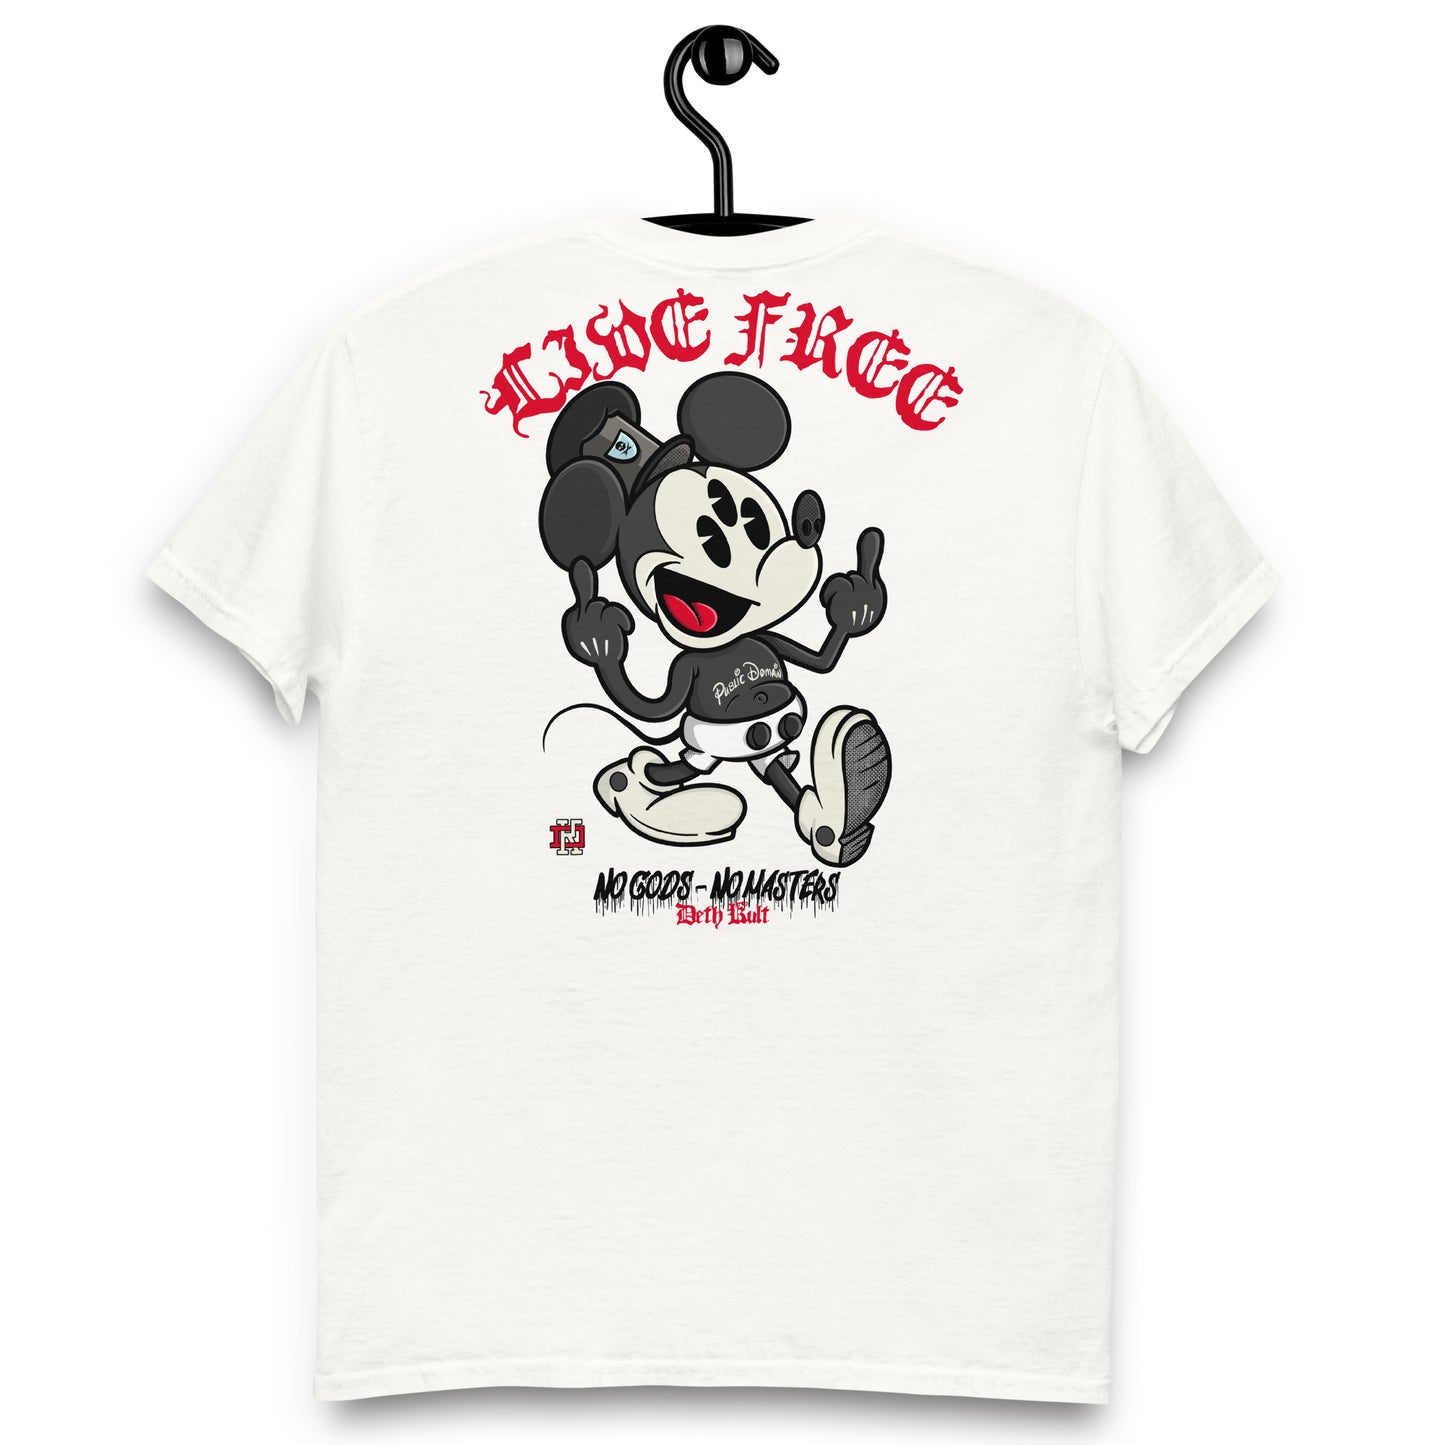 'Free Willie' Unisex t-shirt